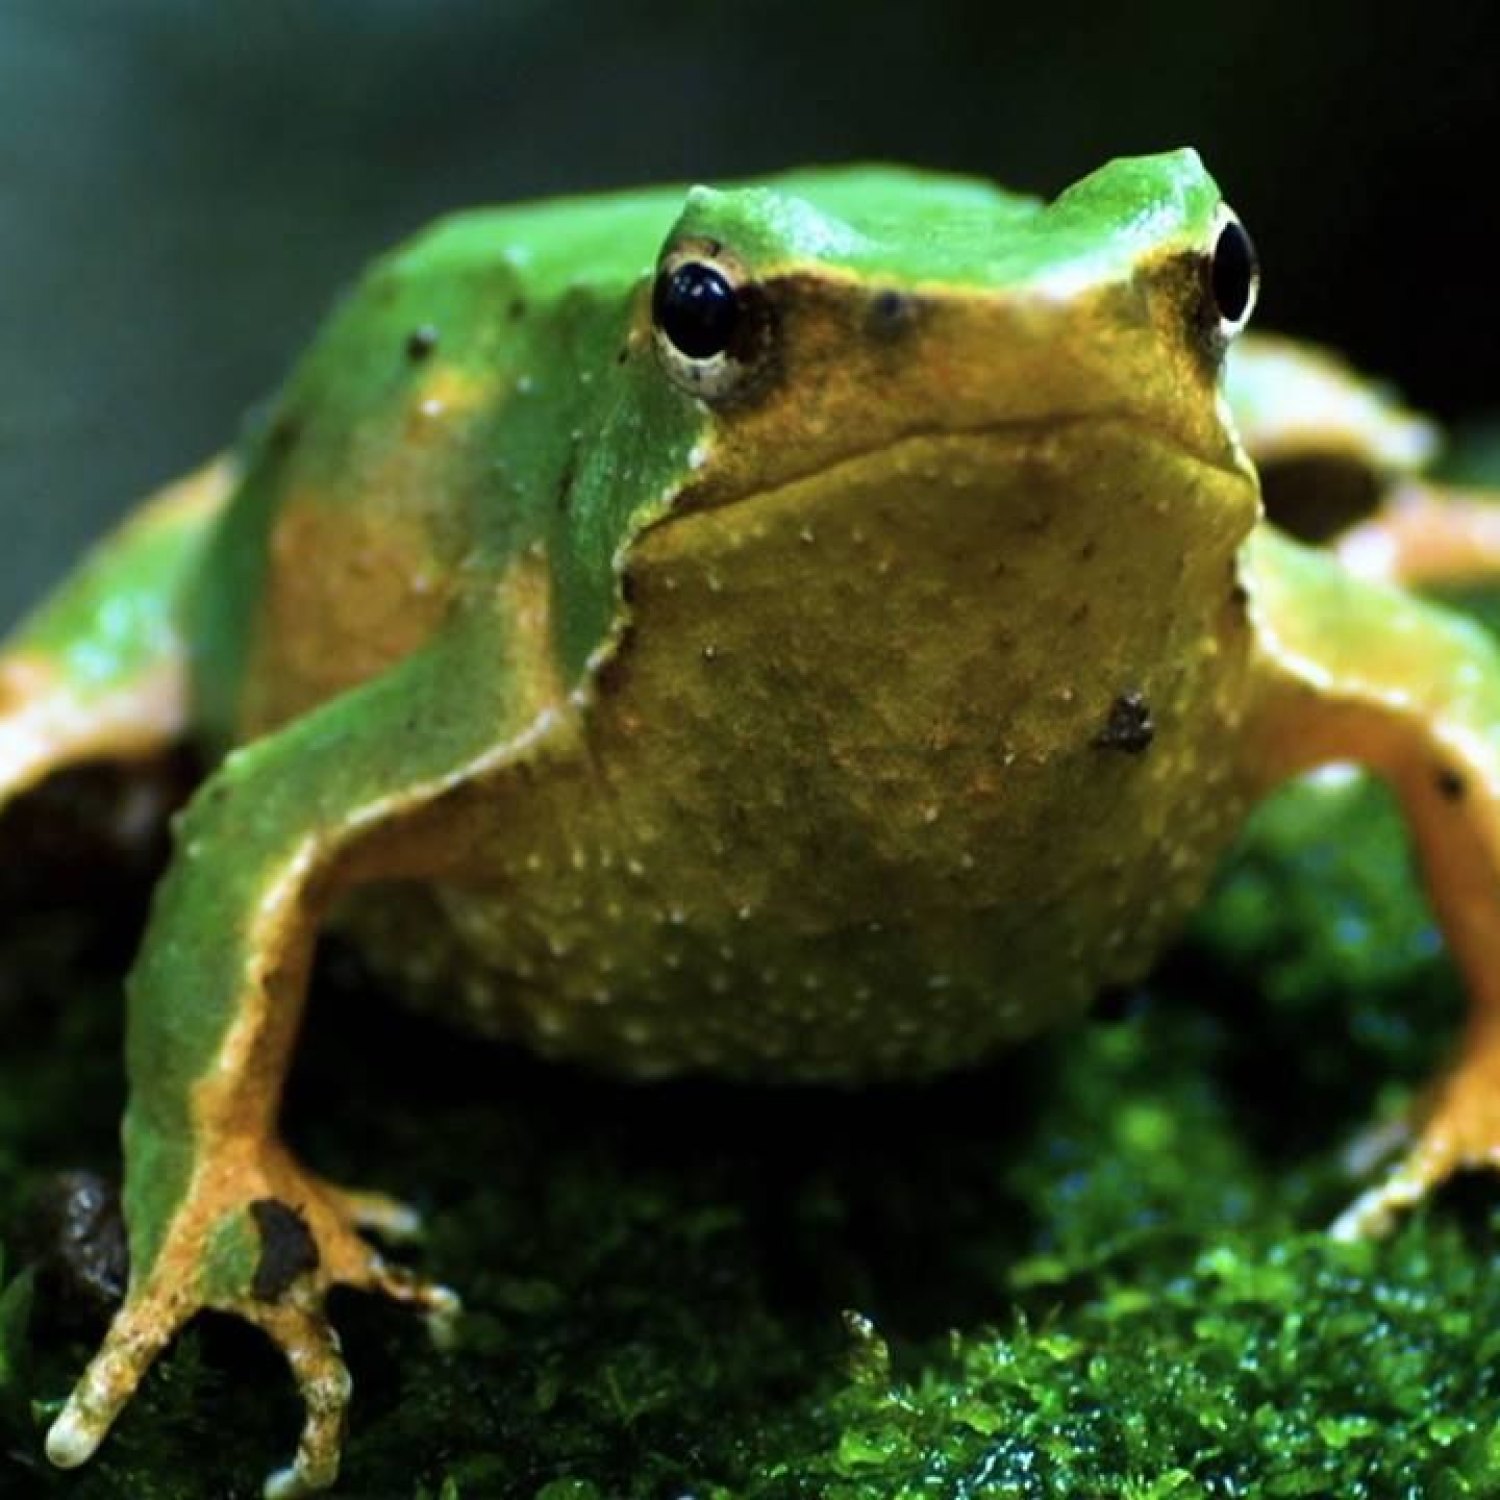 Darwins Frog